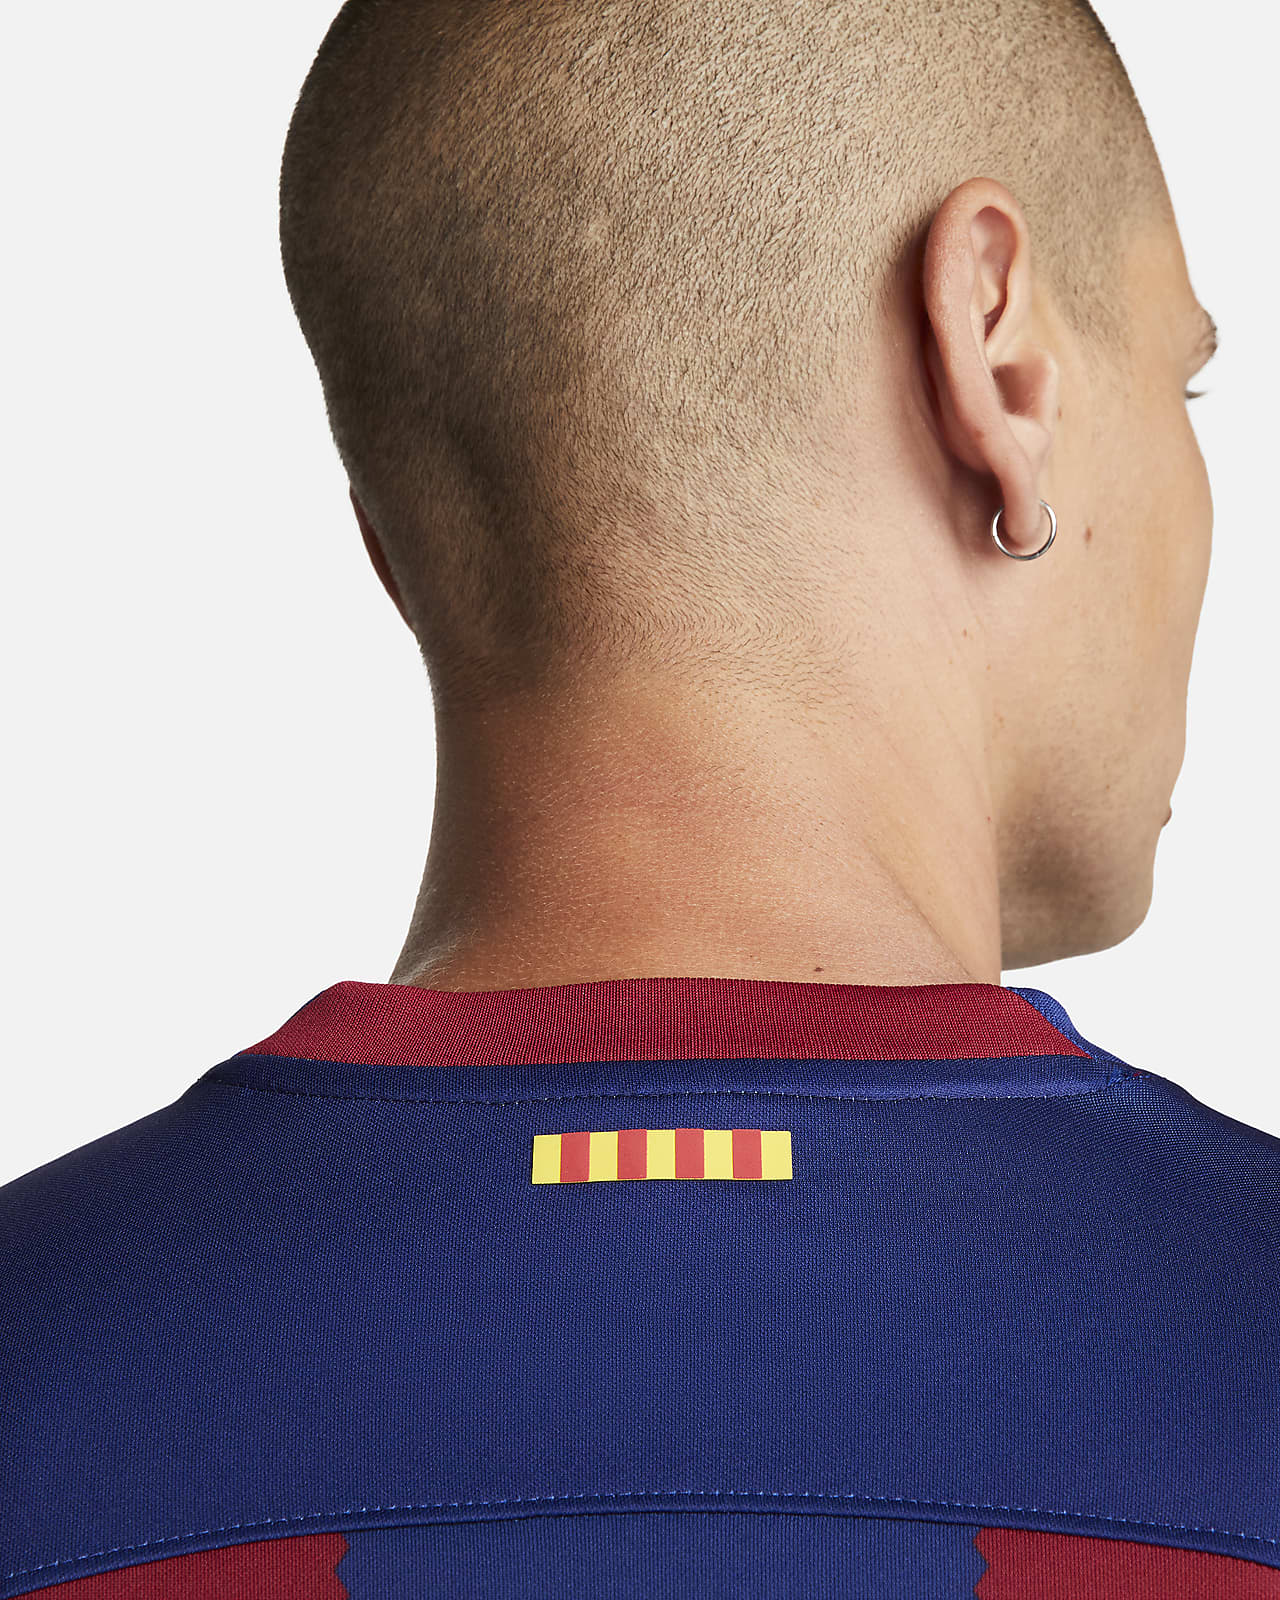 Barcelona Home Soccer Jersey 2023 2024 Dri-Fit ADV Player - Nike